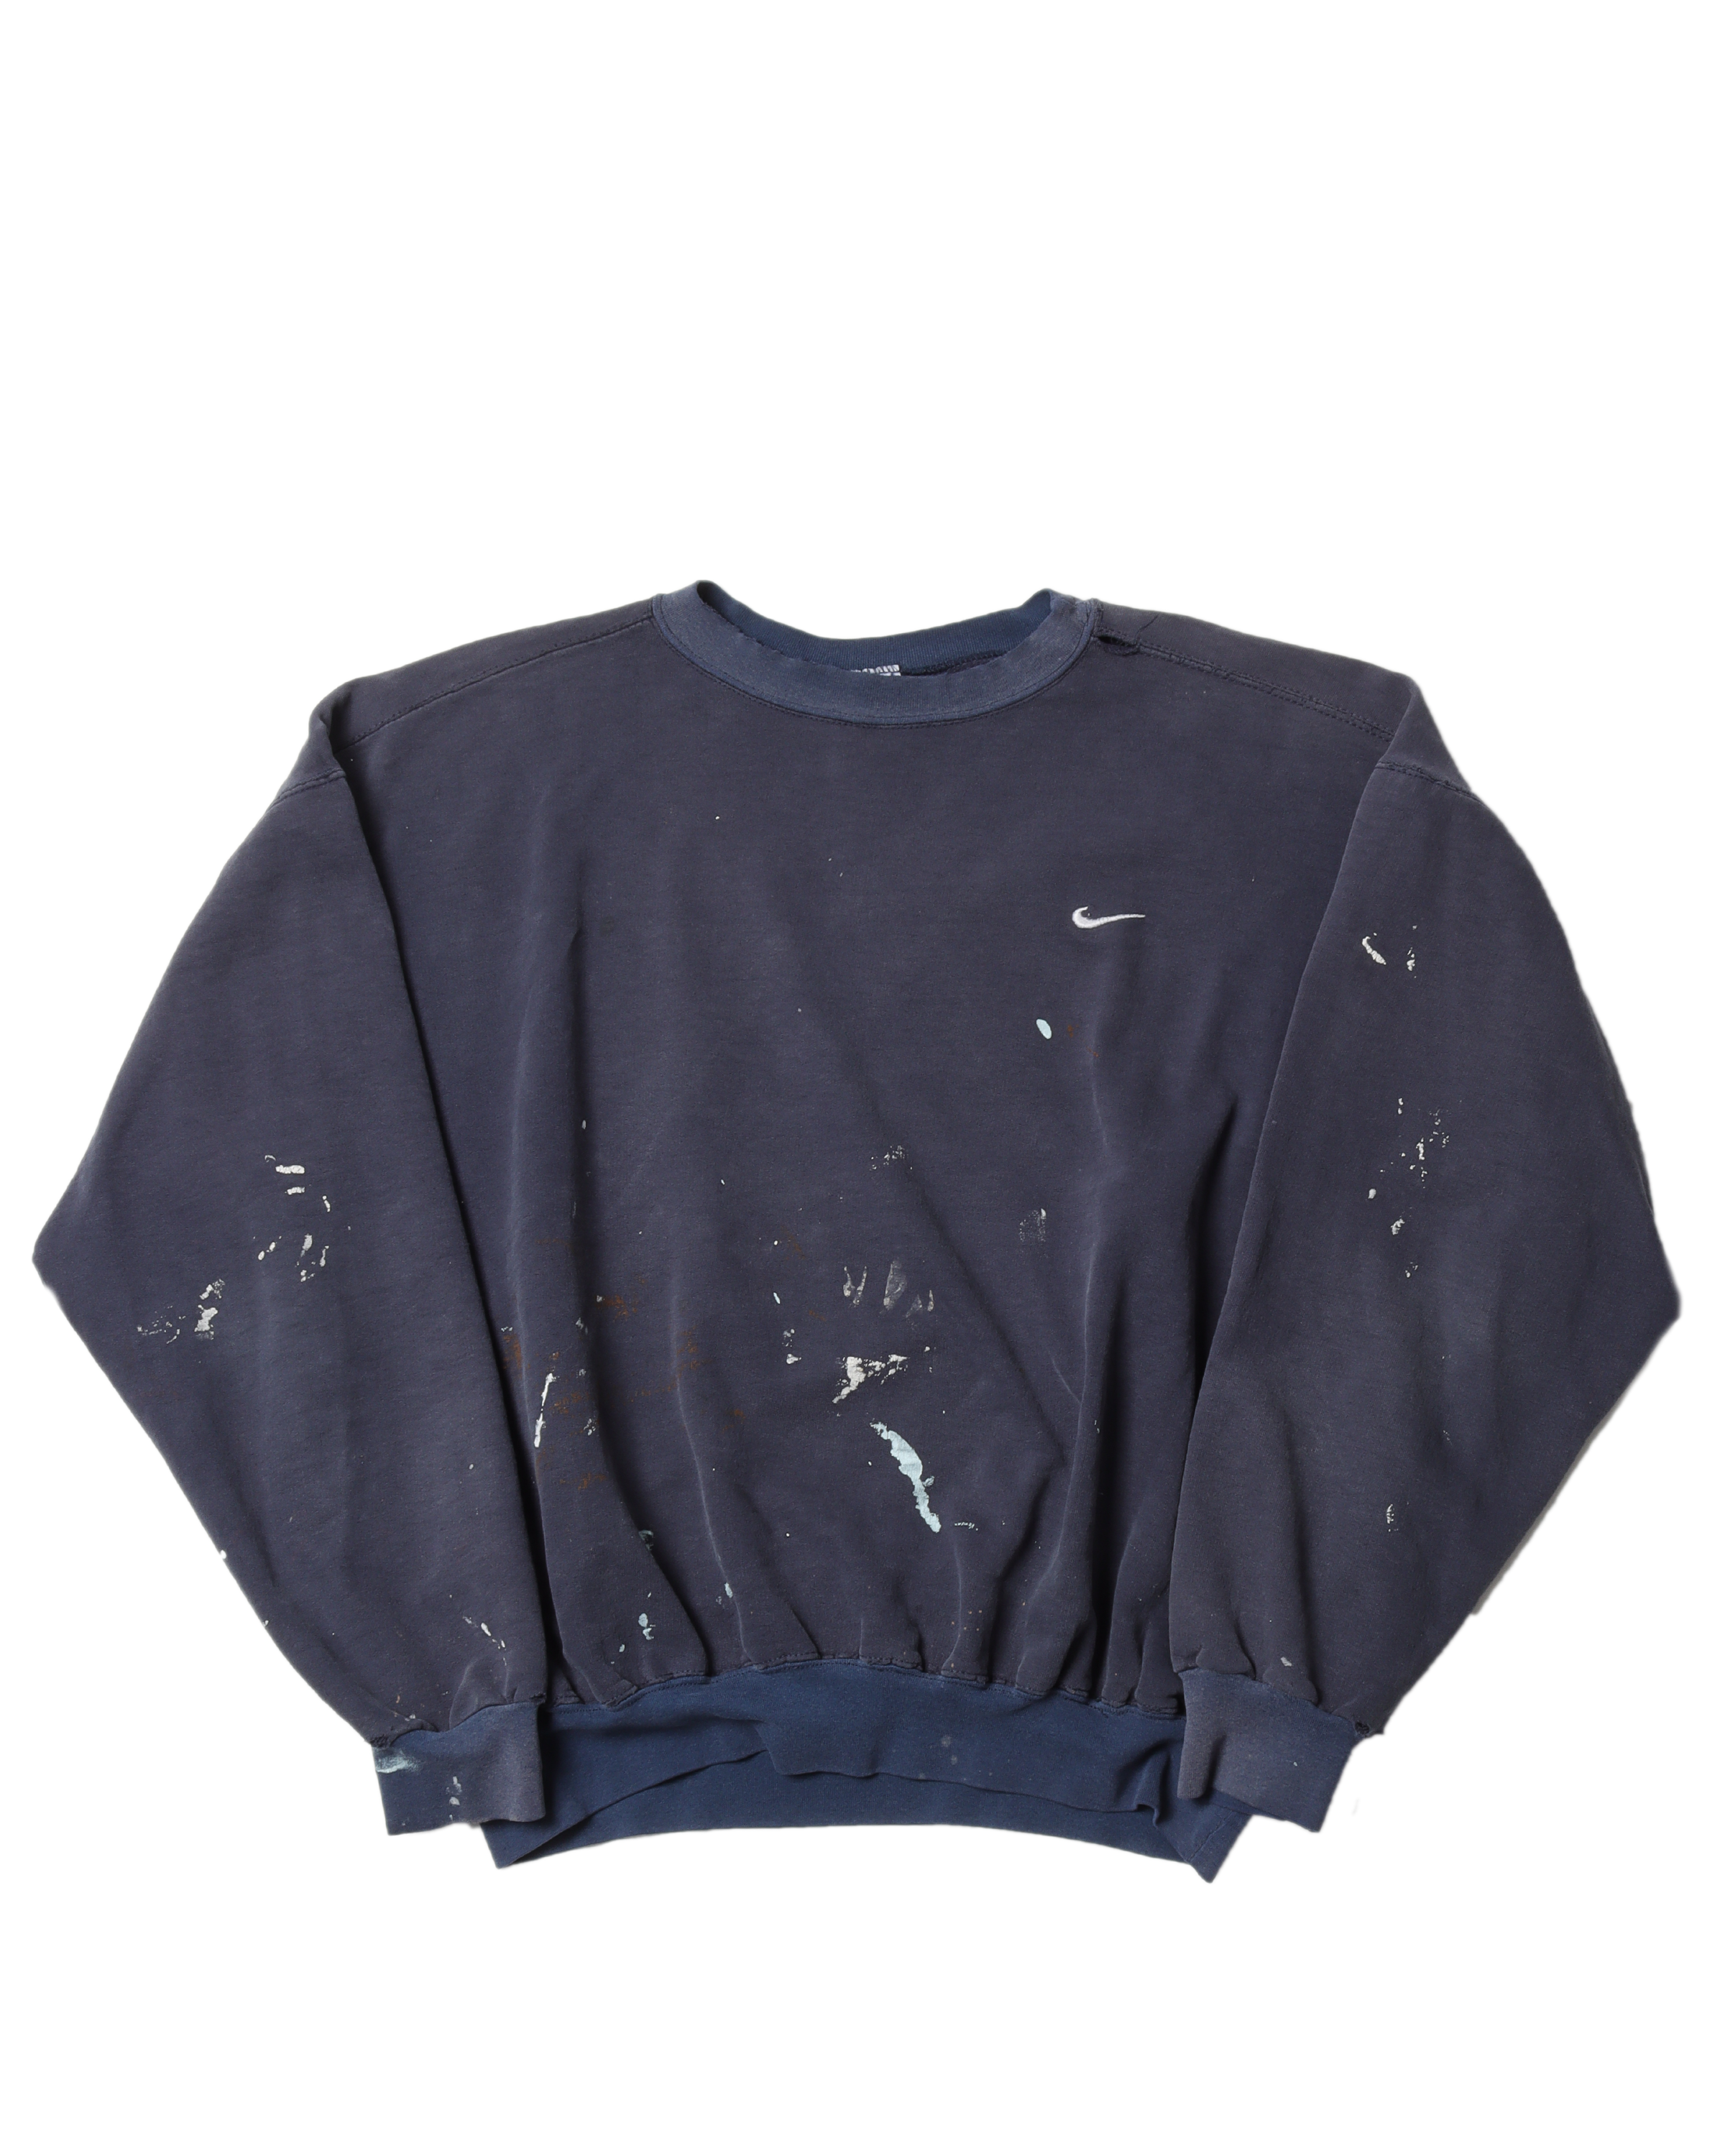 Nike Paint Splatter Sweatshirt